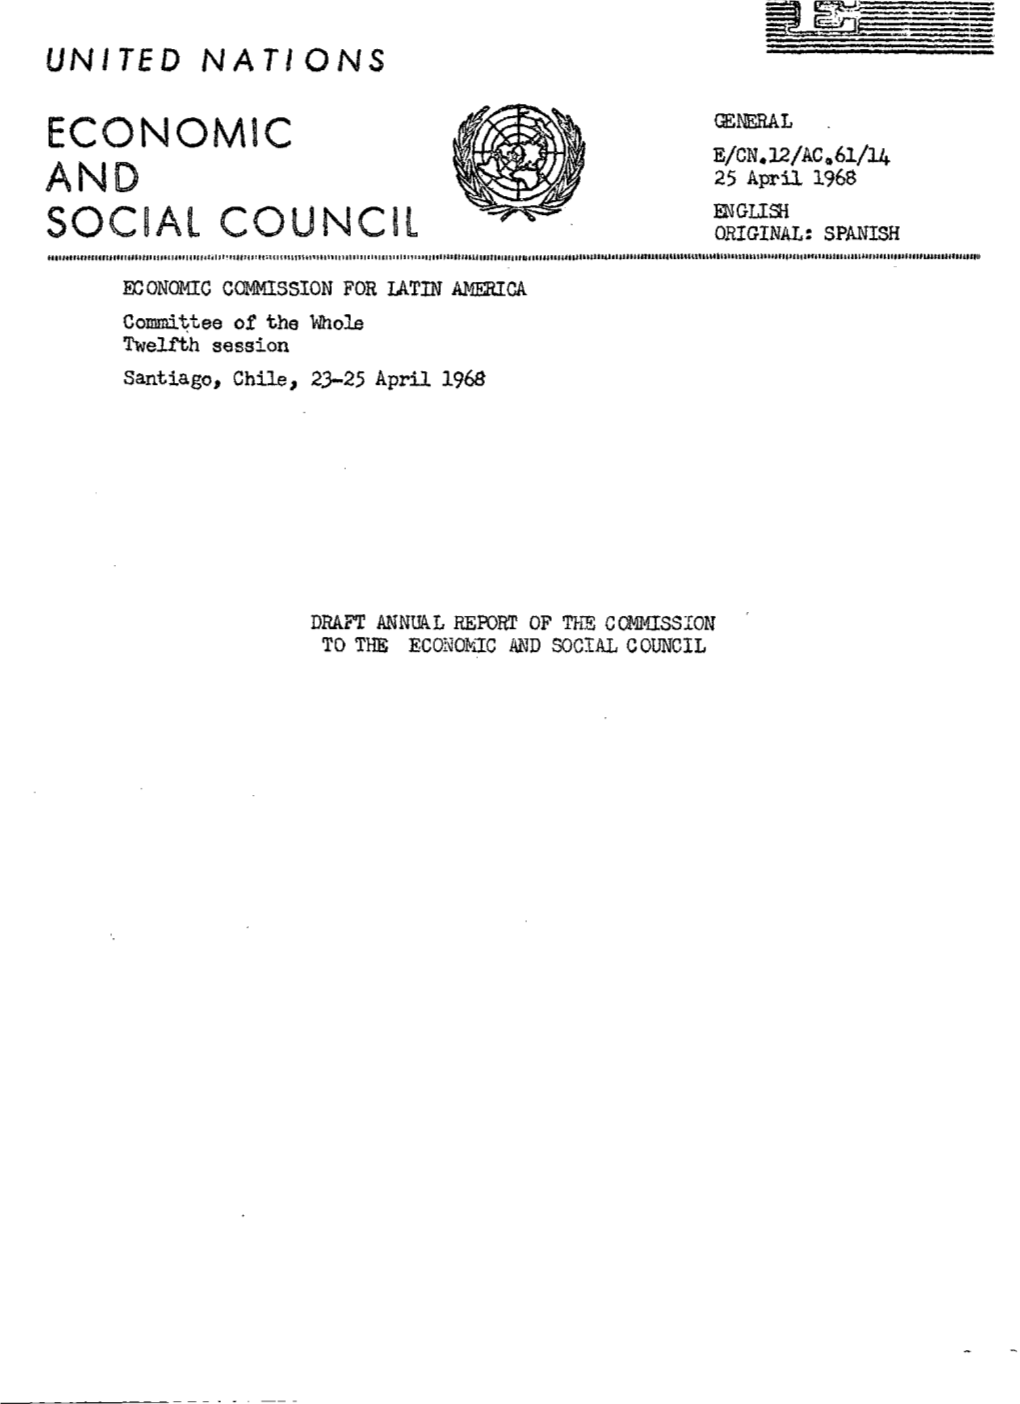 ECONOMIC and SOCIAL COUNCIL E/CN.12/AC.61/14 Page Iii